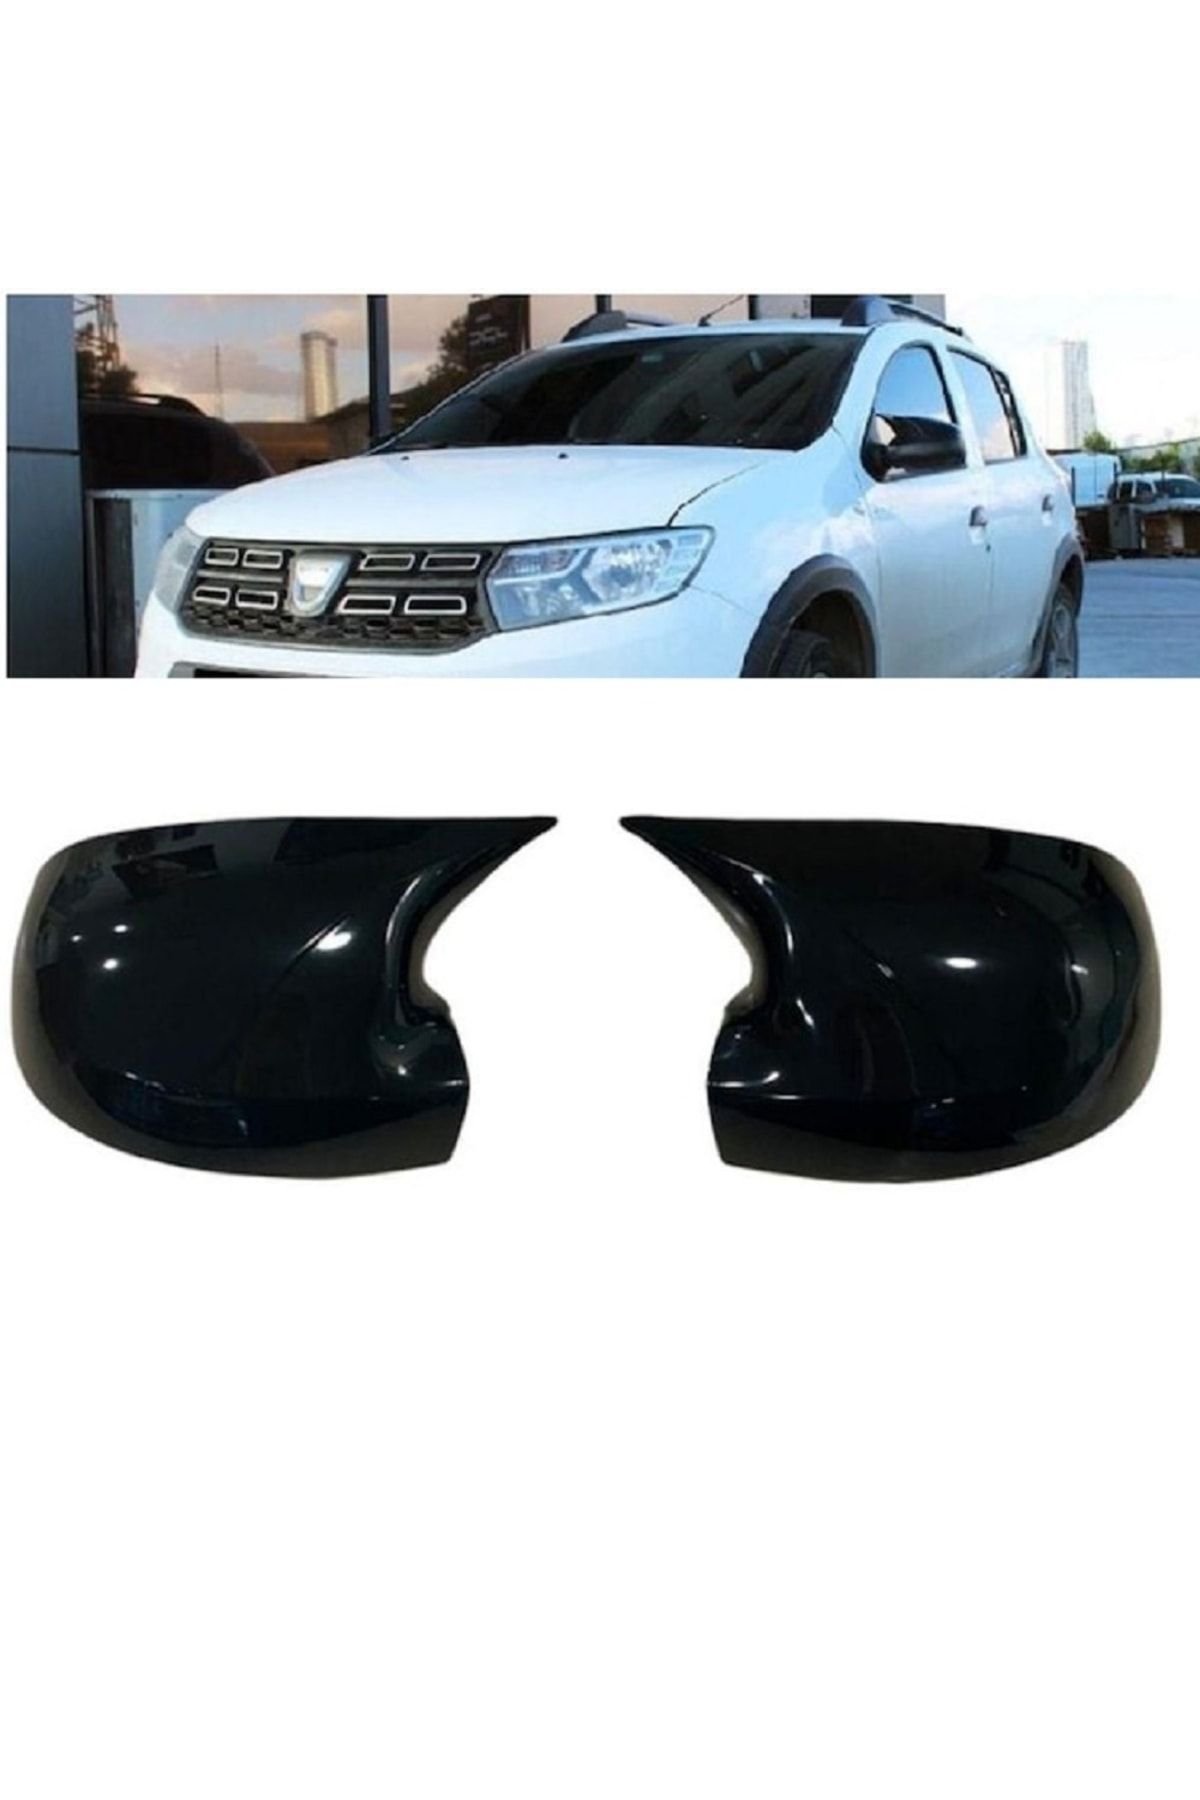 X POWER TUNİNG Dacia Sandero 2009-2020 Compatible Glossy Black